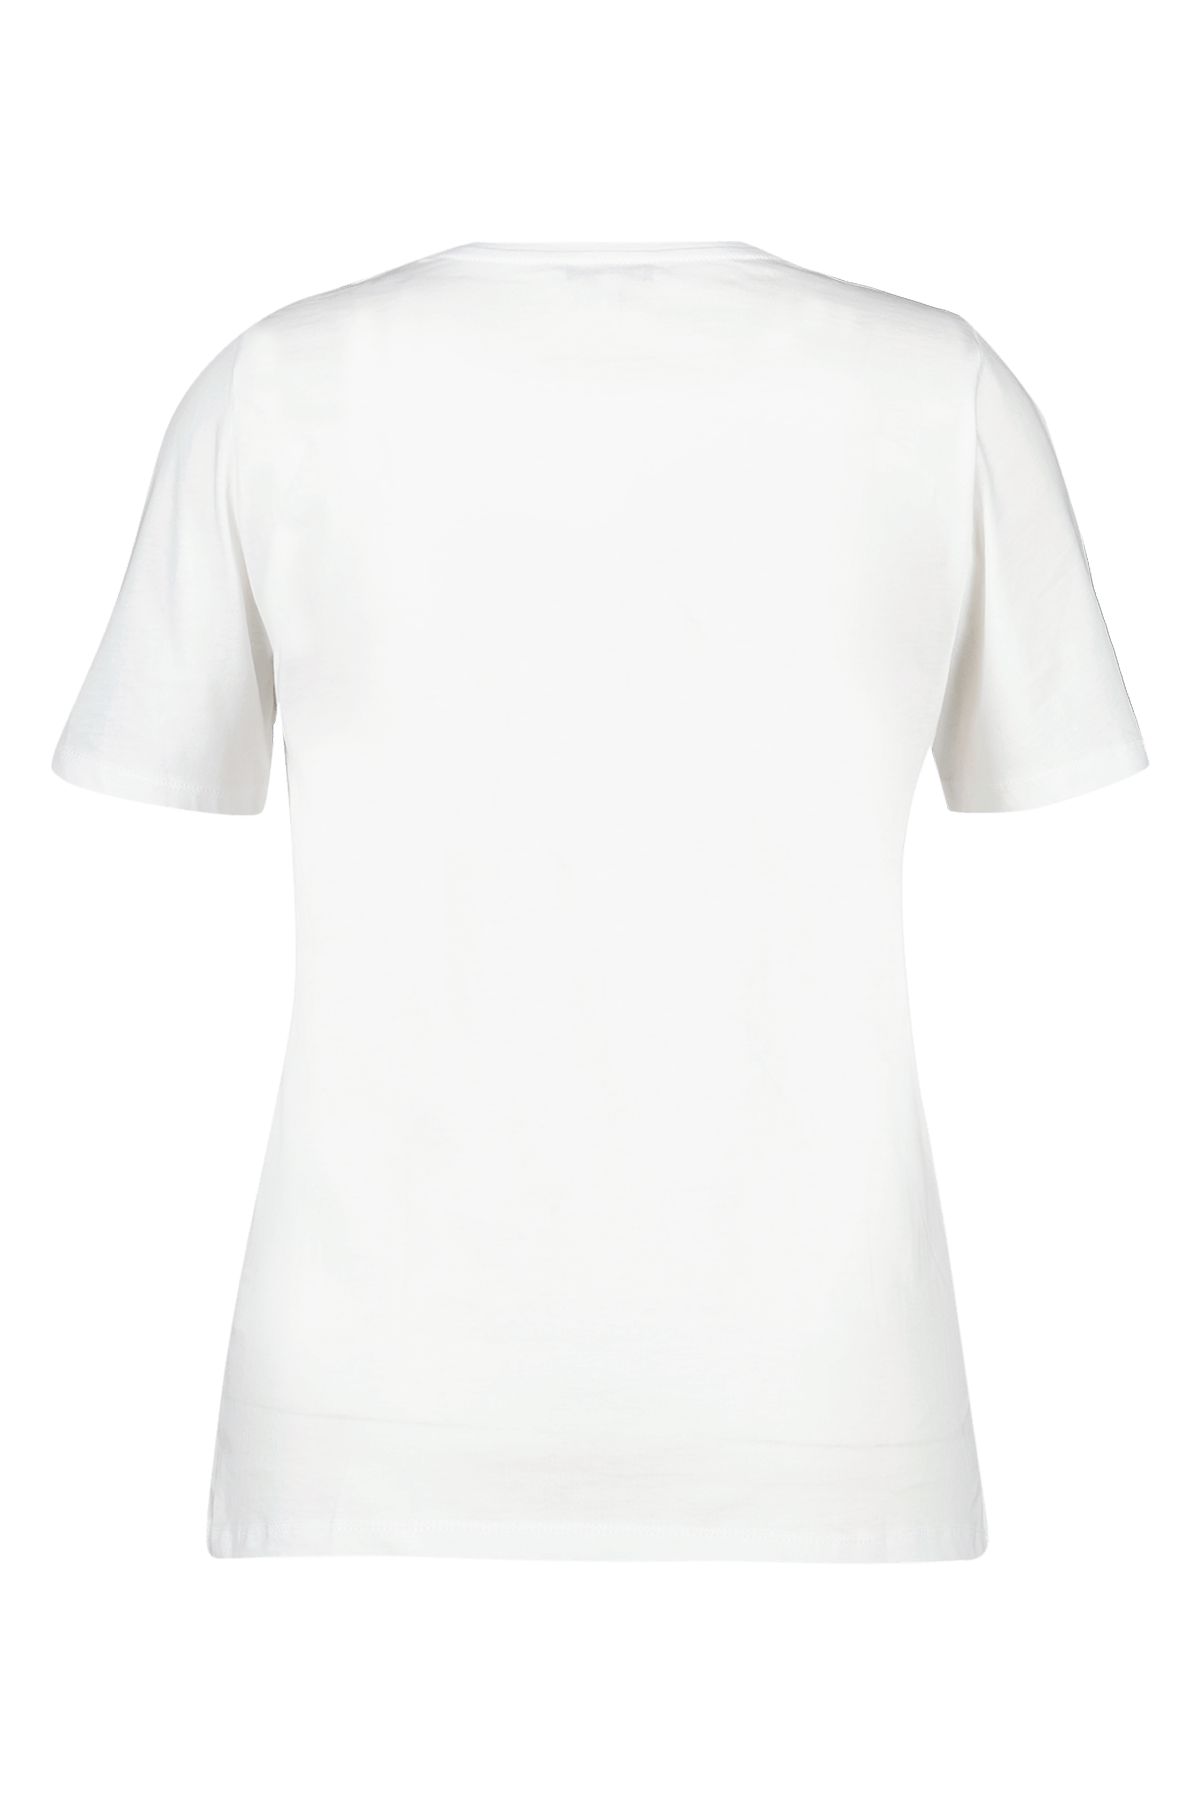 Camiseta con diseño impreso image 2